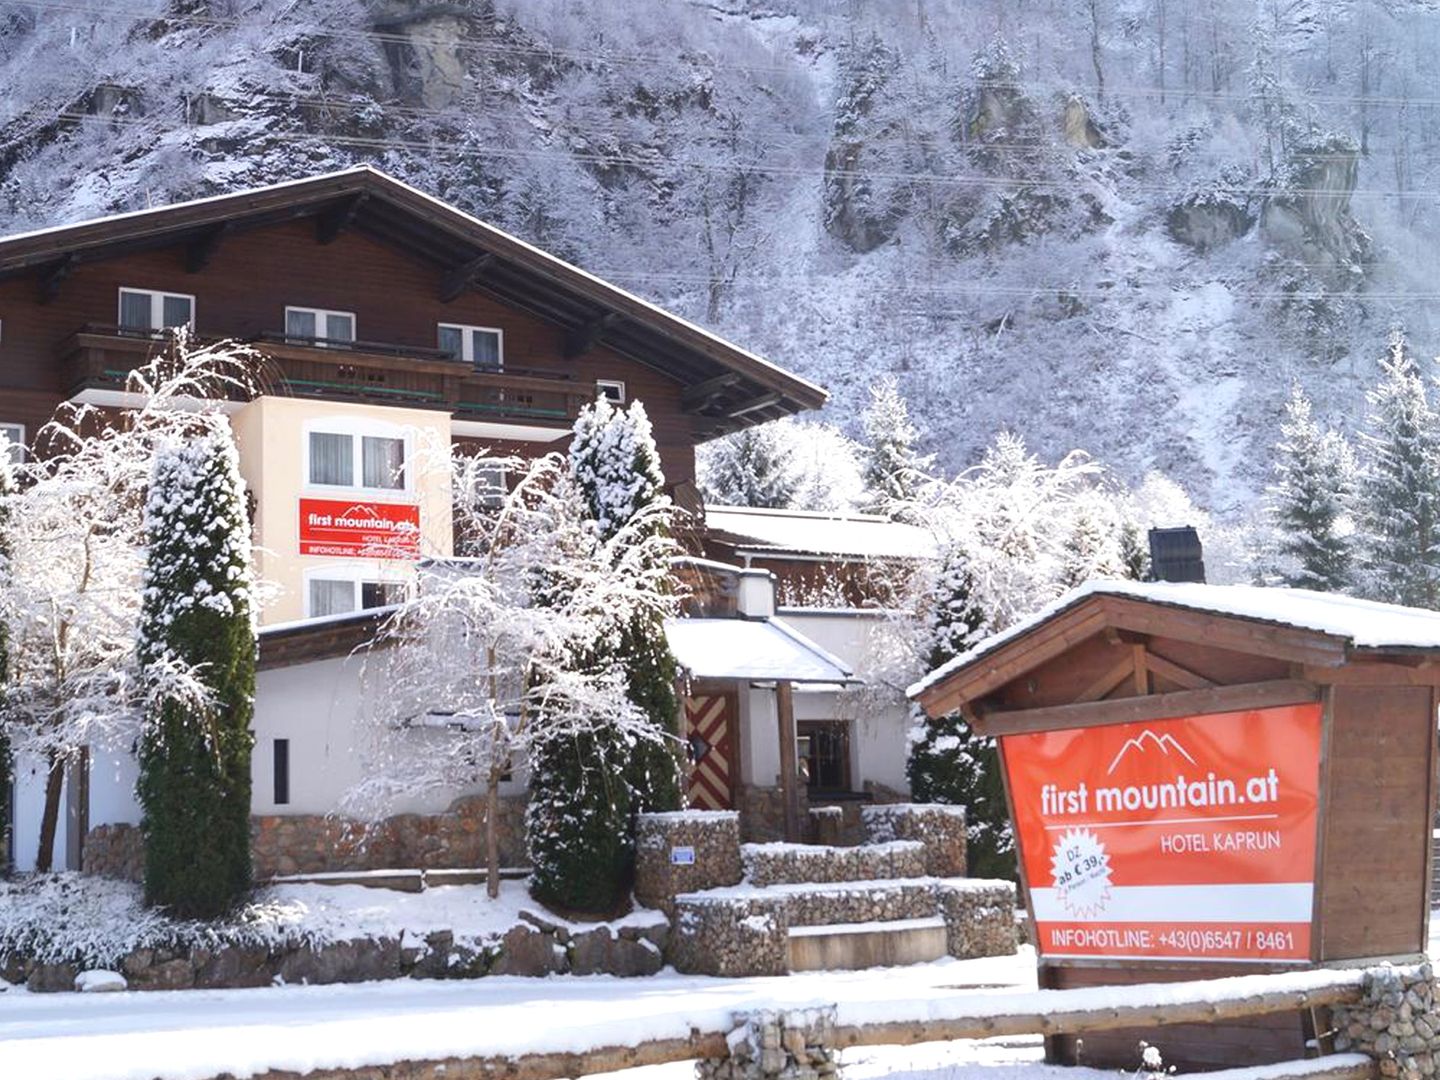 Unterkunft first mountain Hotel Kaprun (Ski-Opening), Kaprun, 